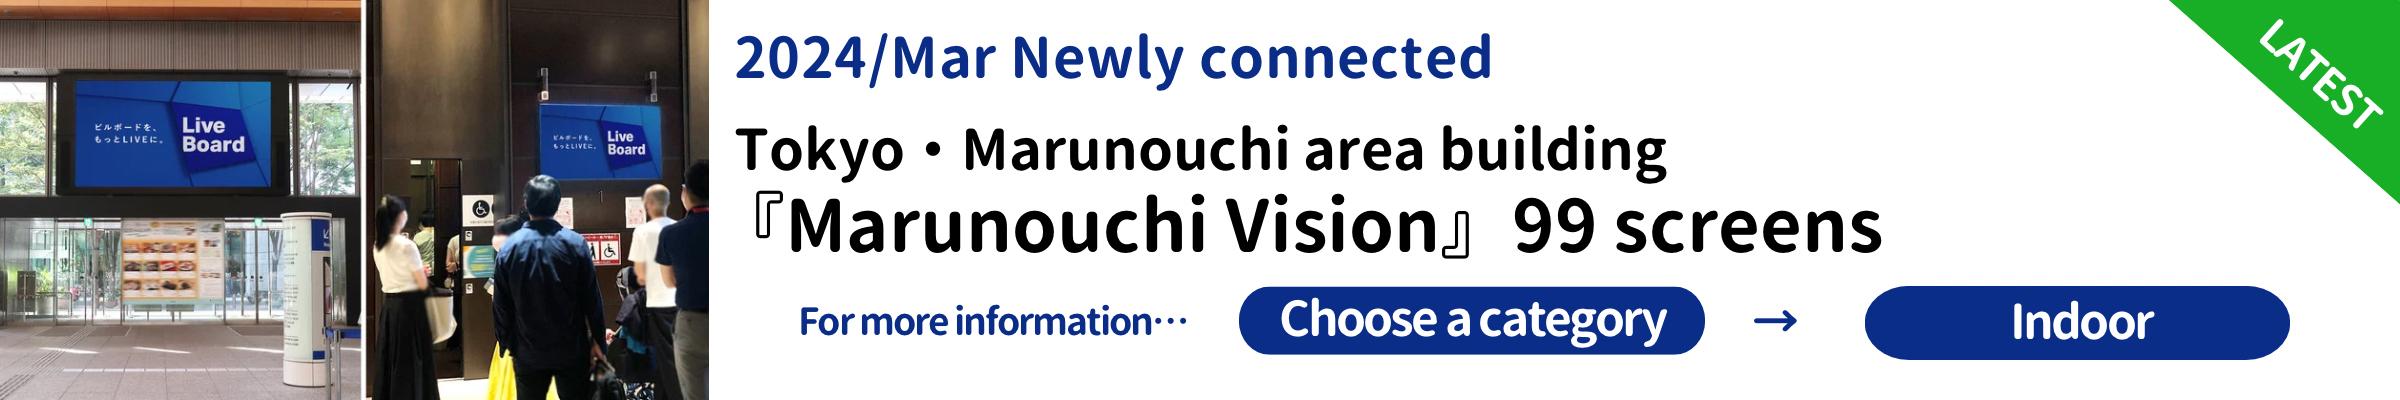 Marunouchi Vision